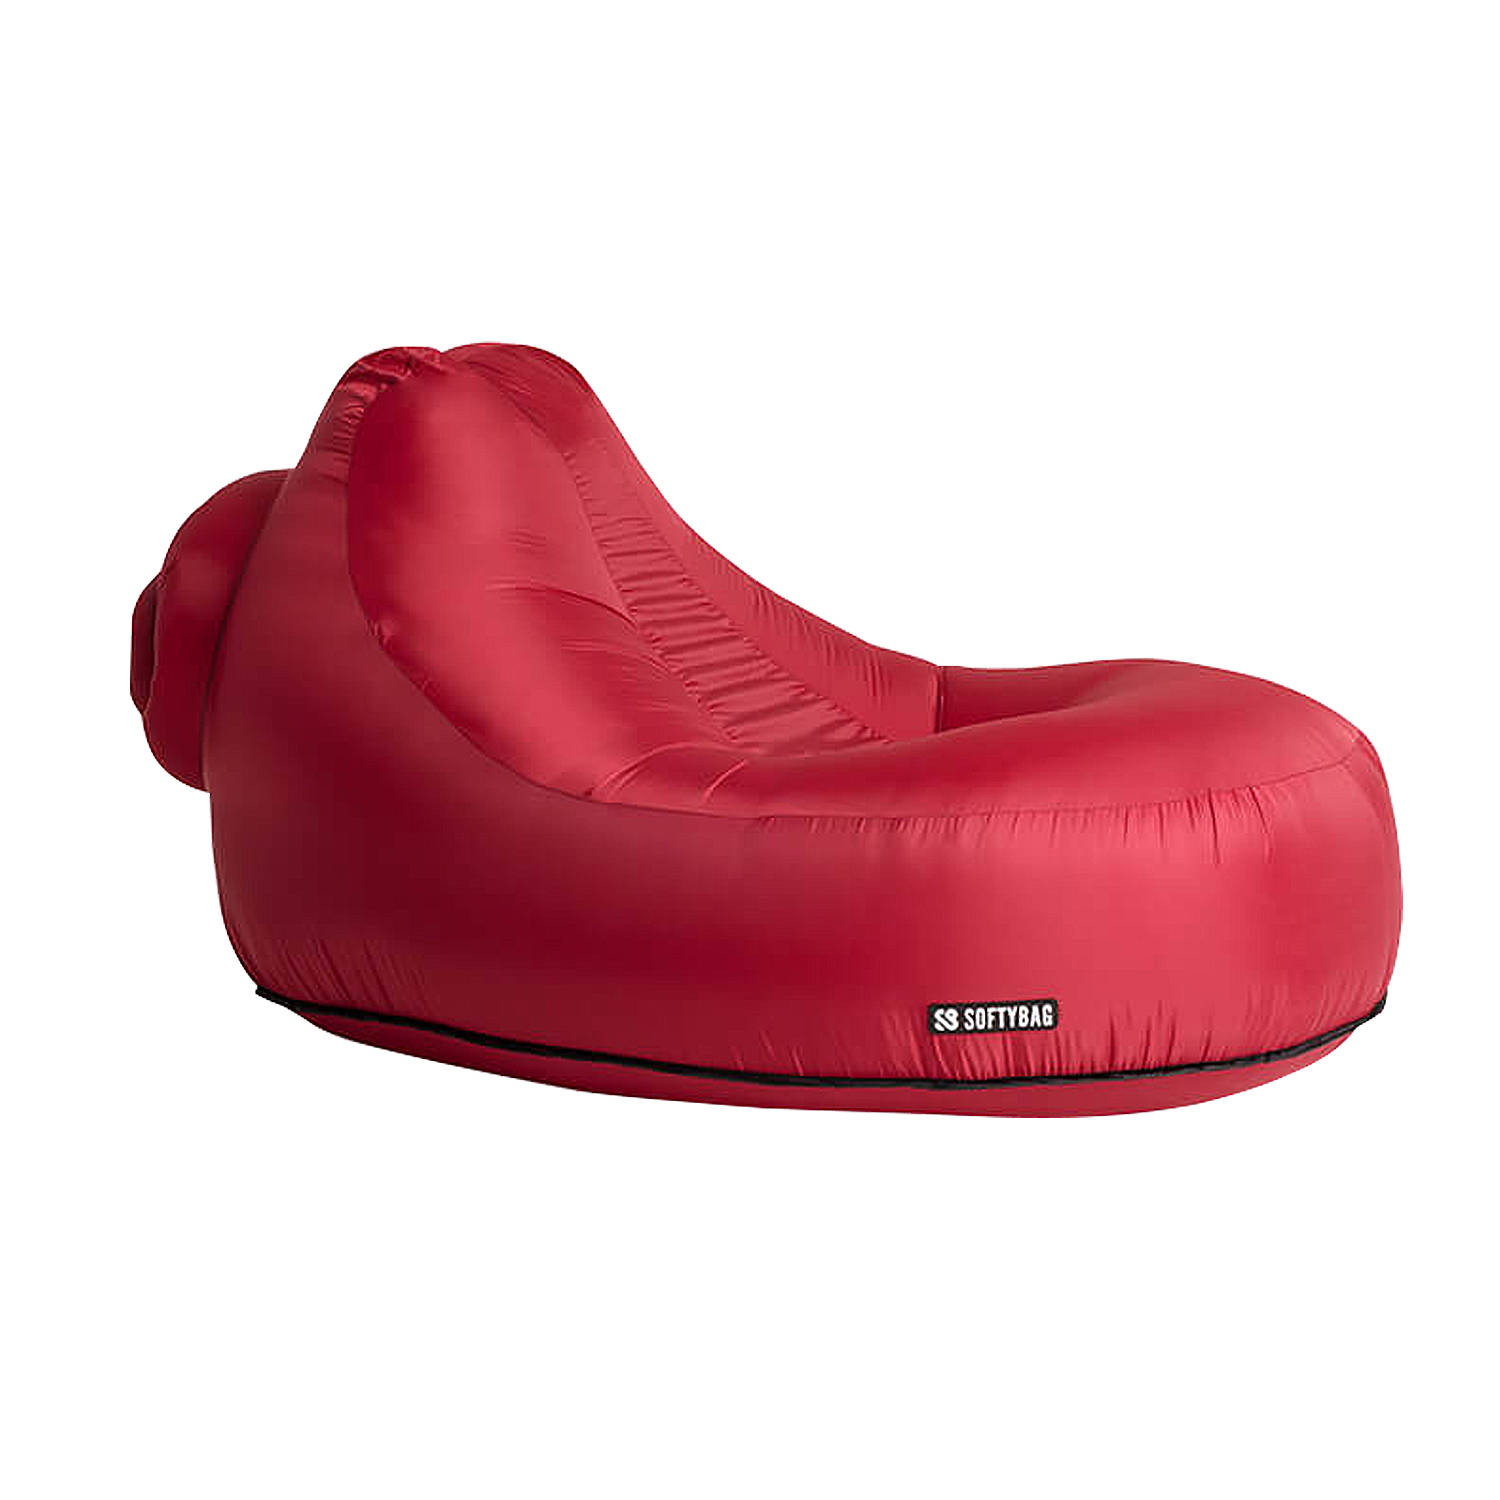 Softybag stoel Rood - Luchtbedden - Luchtzak - Air lounger - Ligzak - Luchtbank - Opblaasbare stoel - Luchtzak strand - Opblaasbare zitzak - Chili rood - Opblaasbare bank - Lijkt o